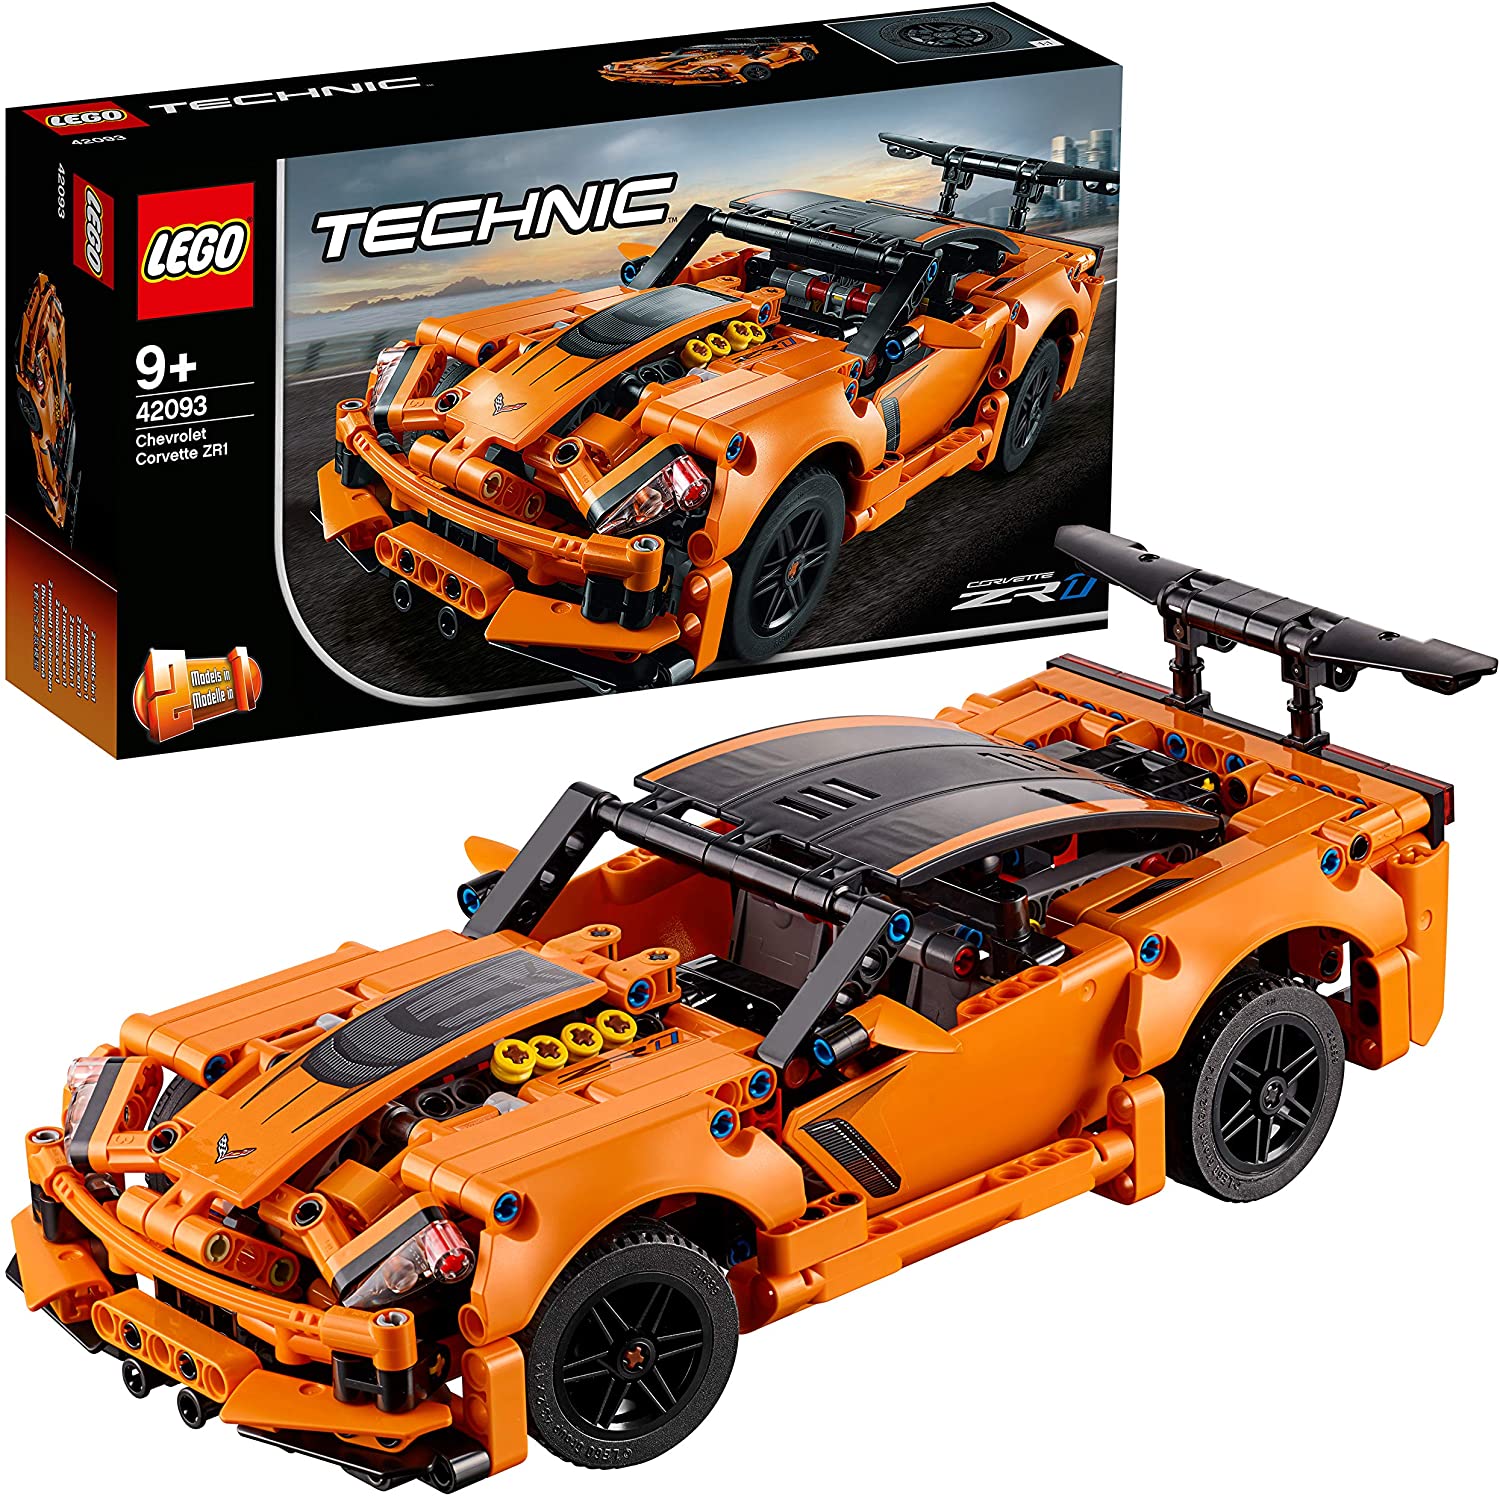 579-Piece LEGO Technic Chevrolet Corvette ZR1 Building Kit (42093) $40 + Free Shipping